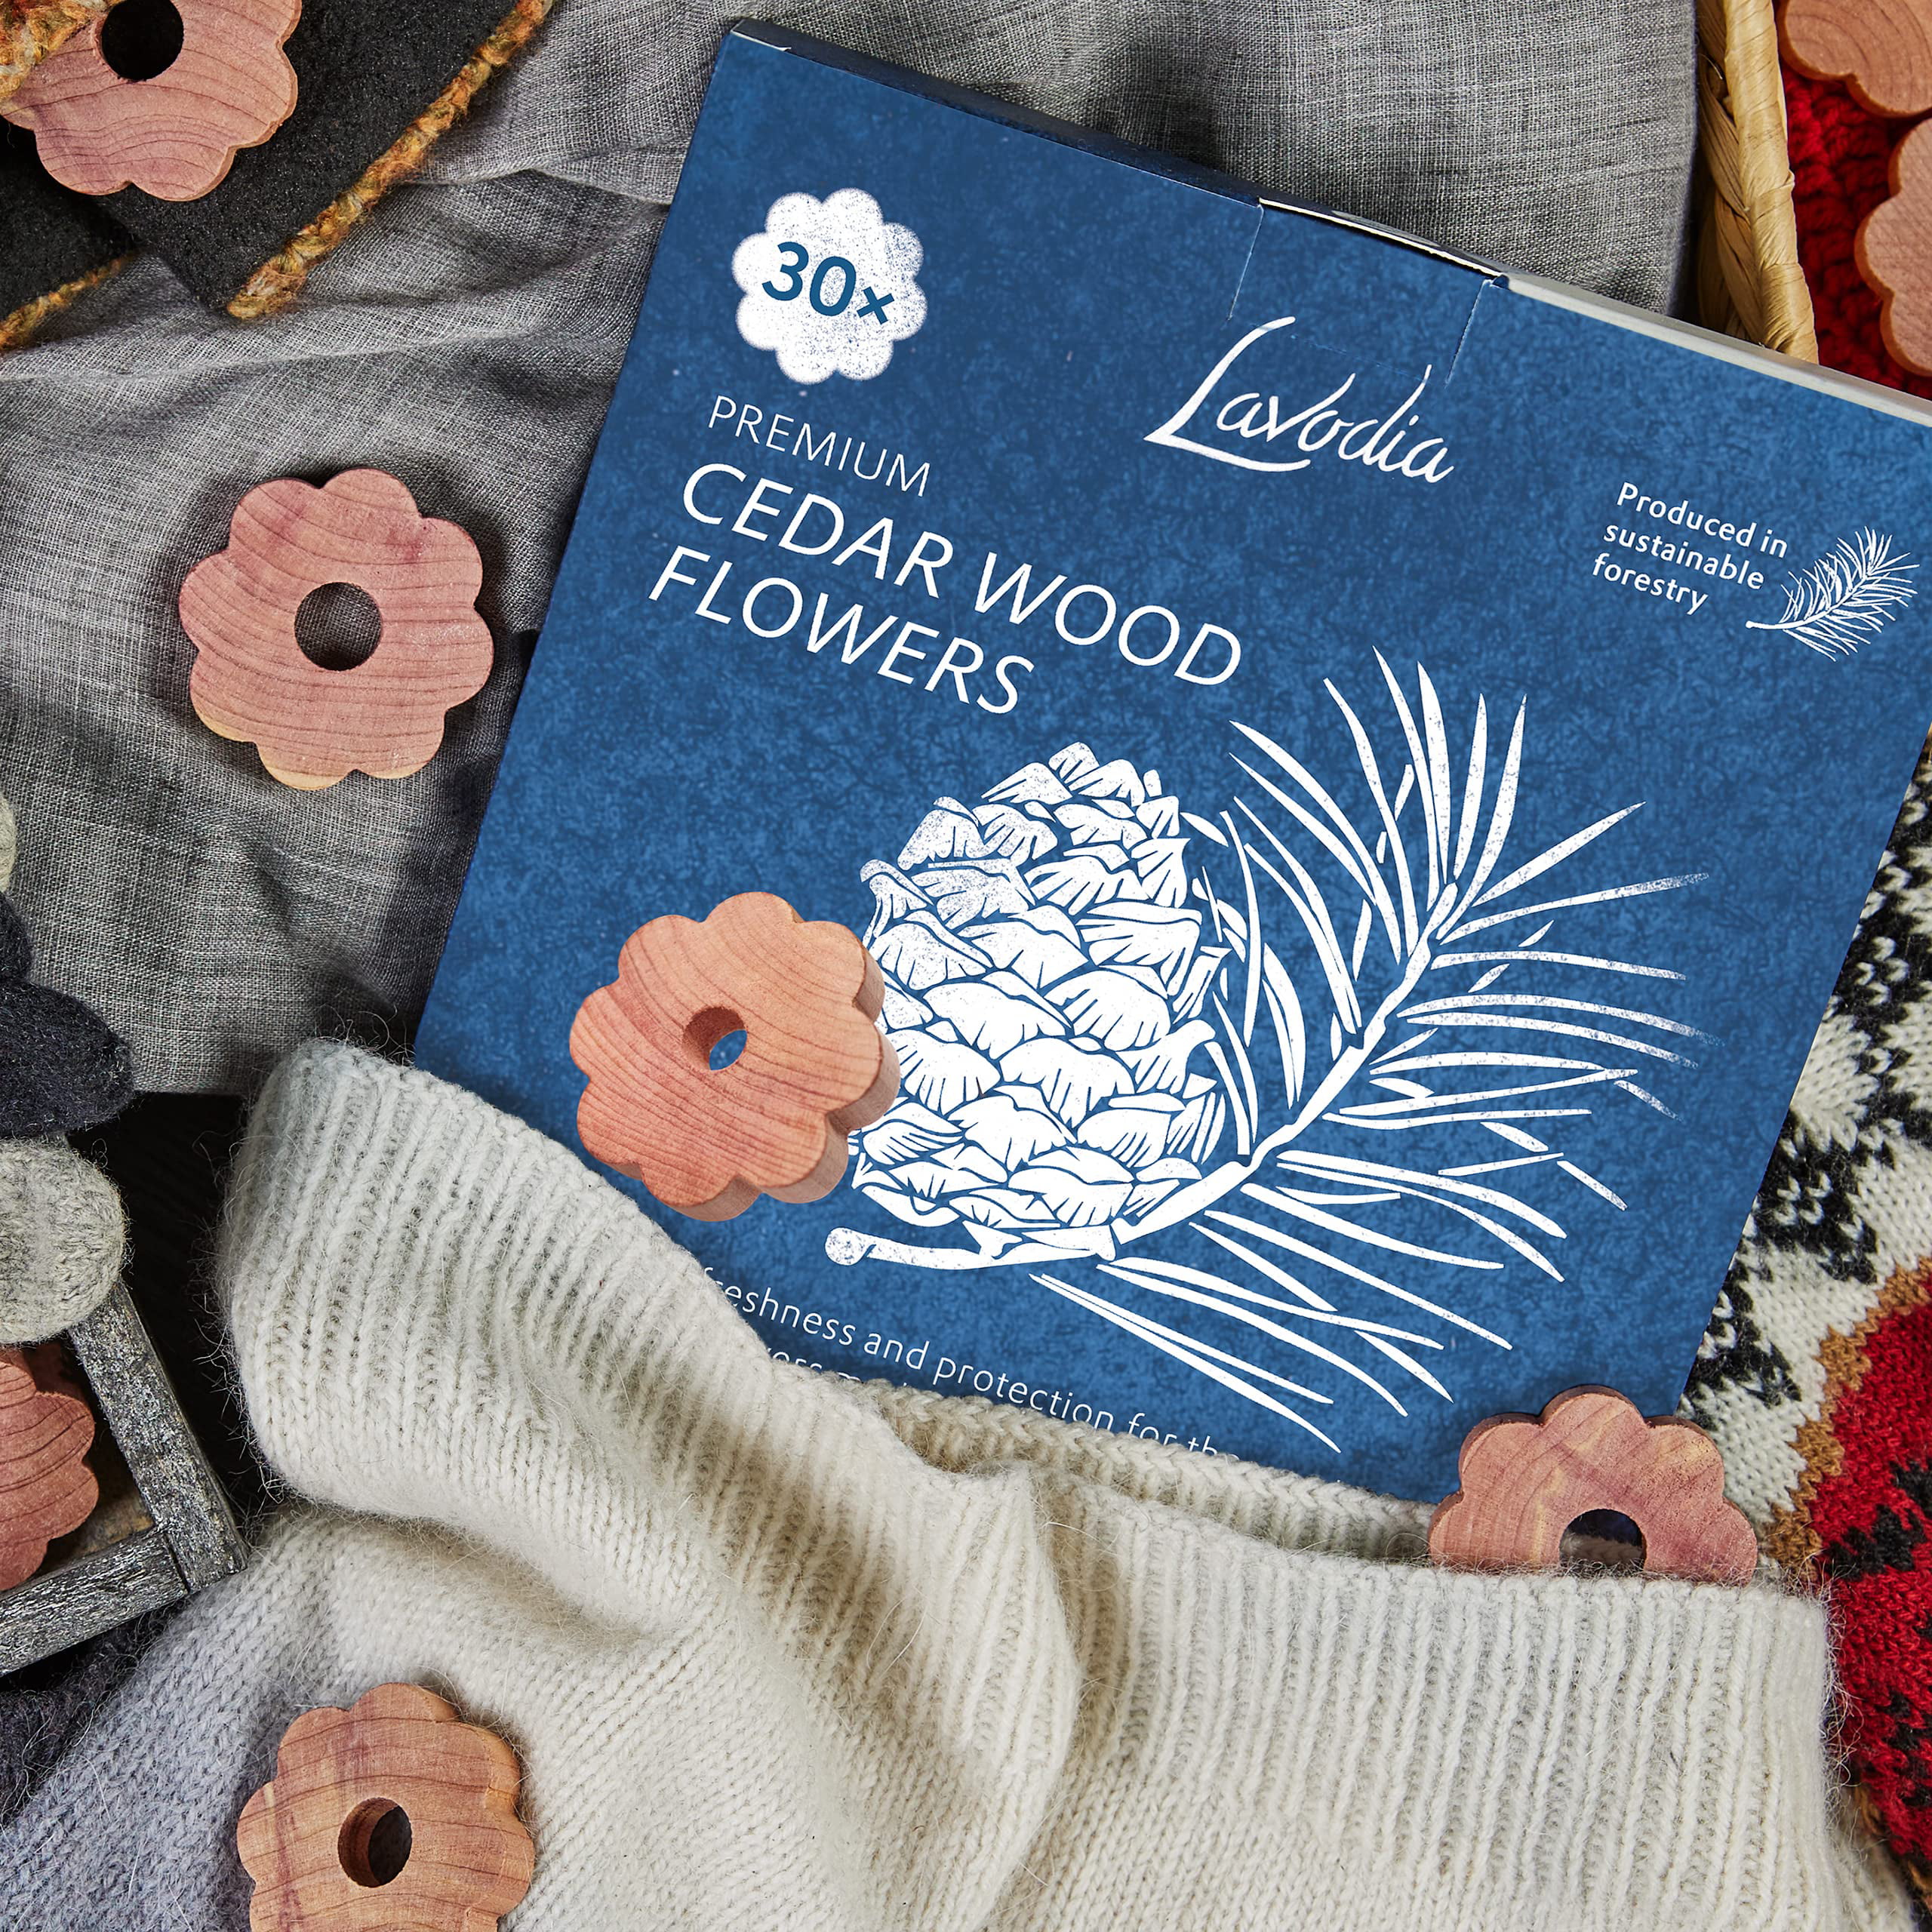 LAVODIA Moth Repellents for Closets: 30X Premium Cedar Wood Flower Rings  for Han